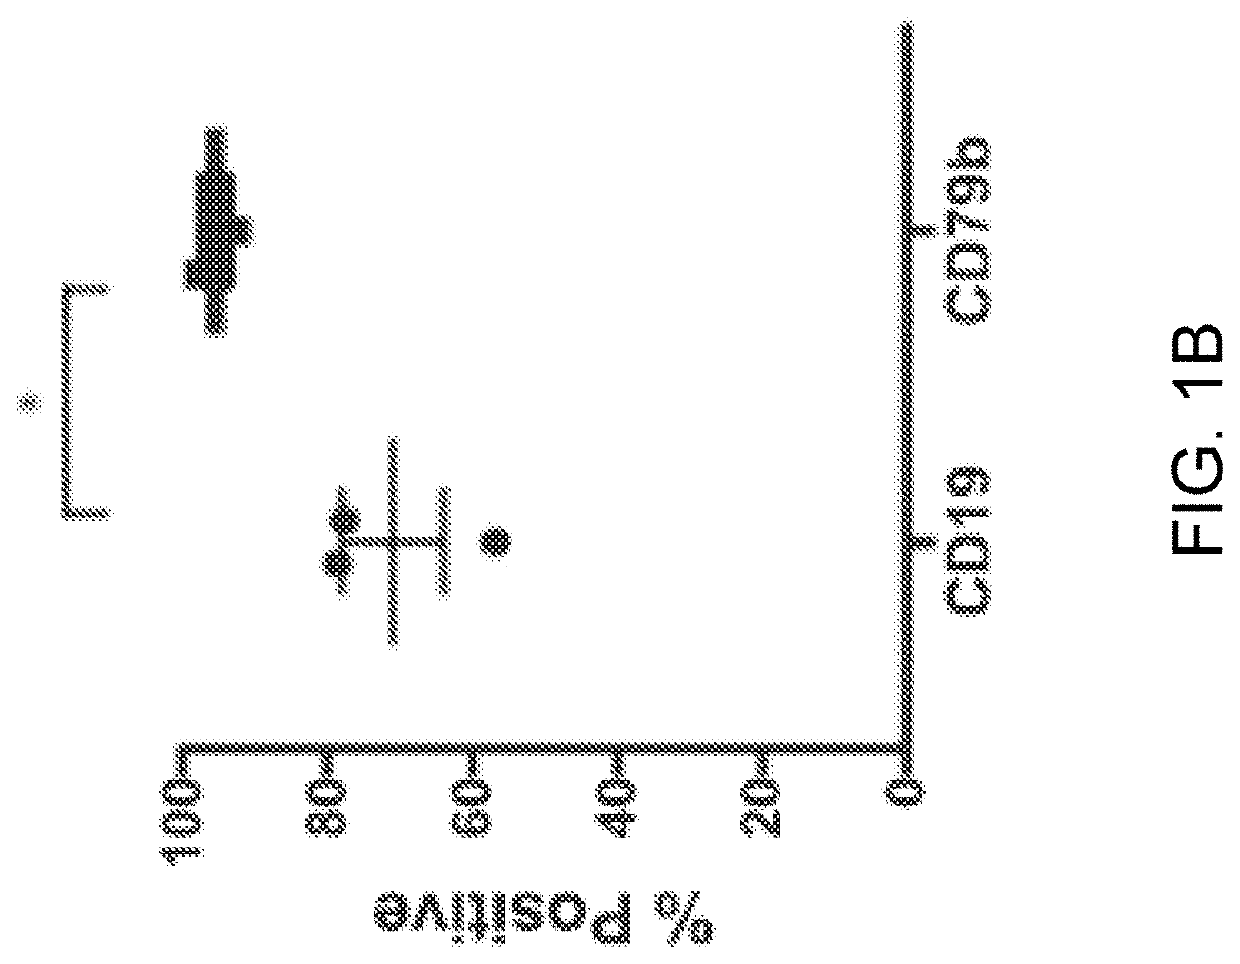 Chimeric antigen receptors targeting cd79b and cd19